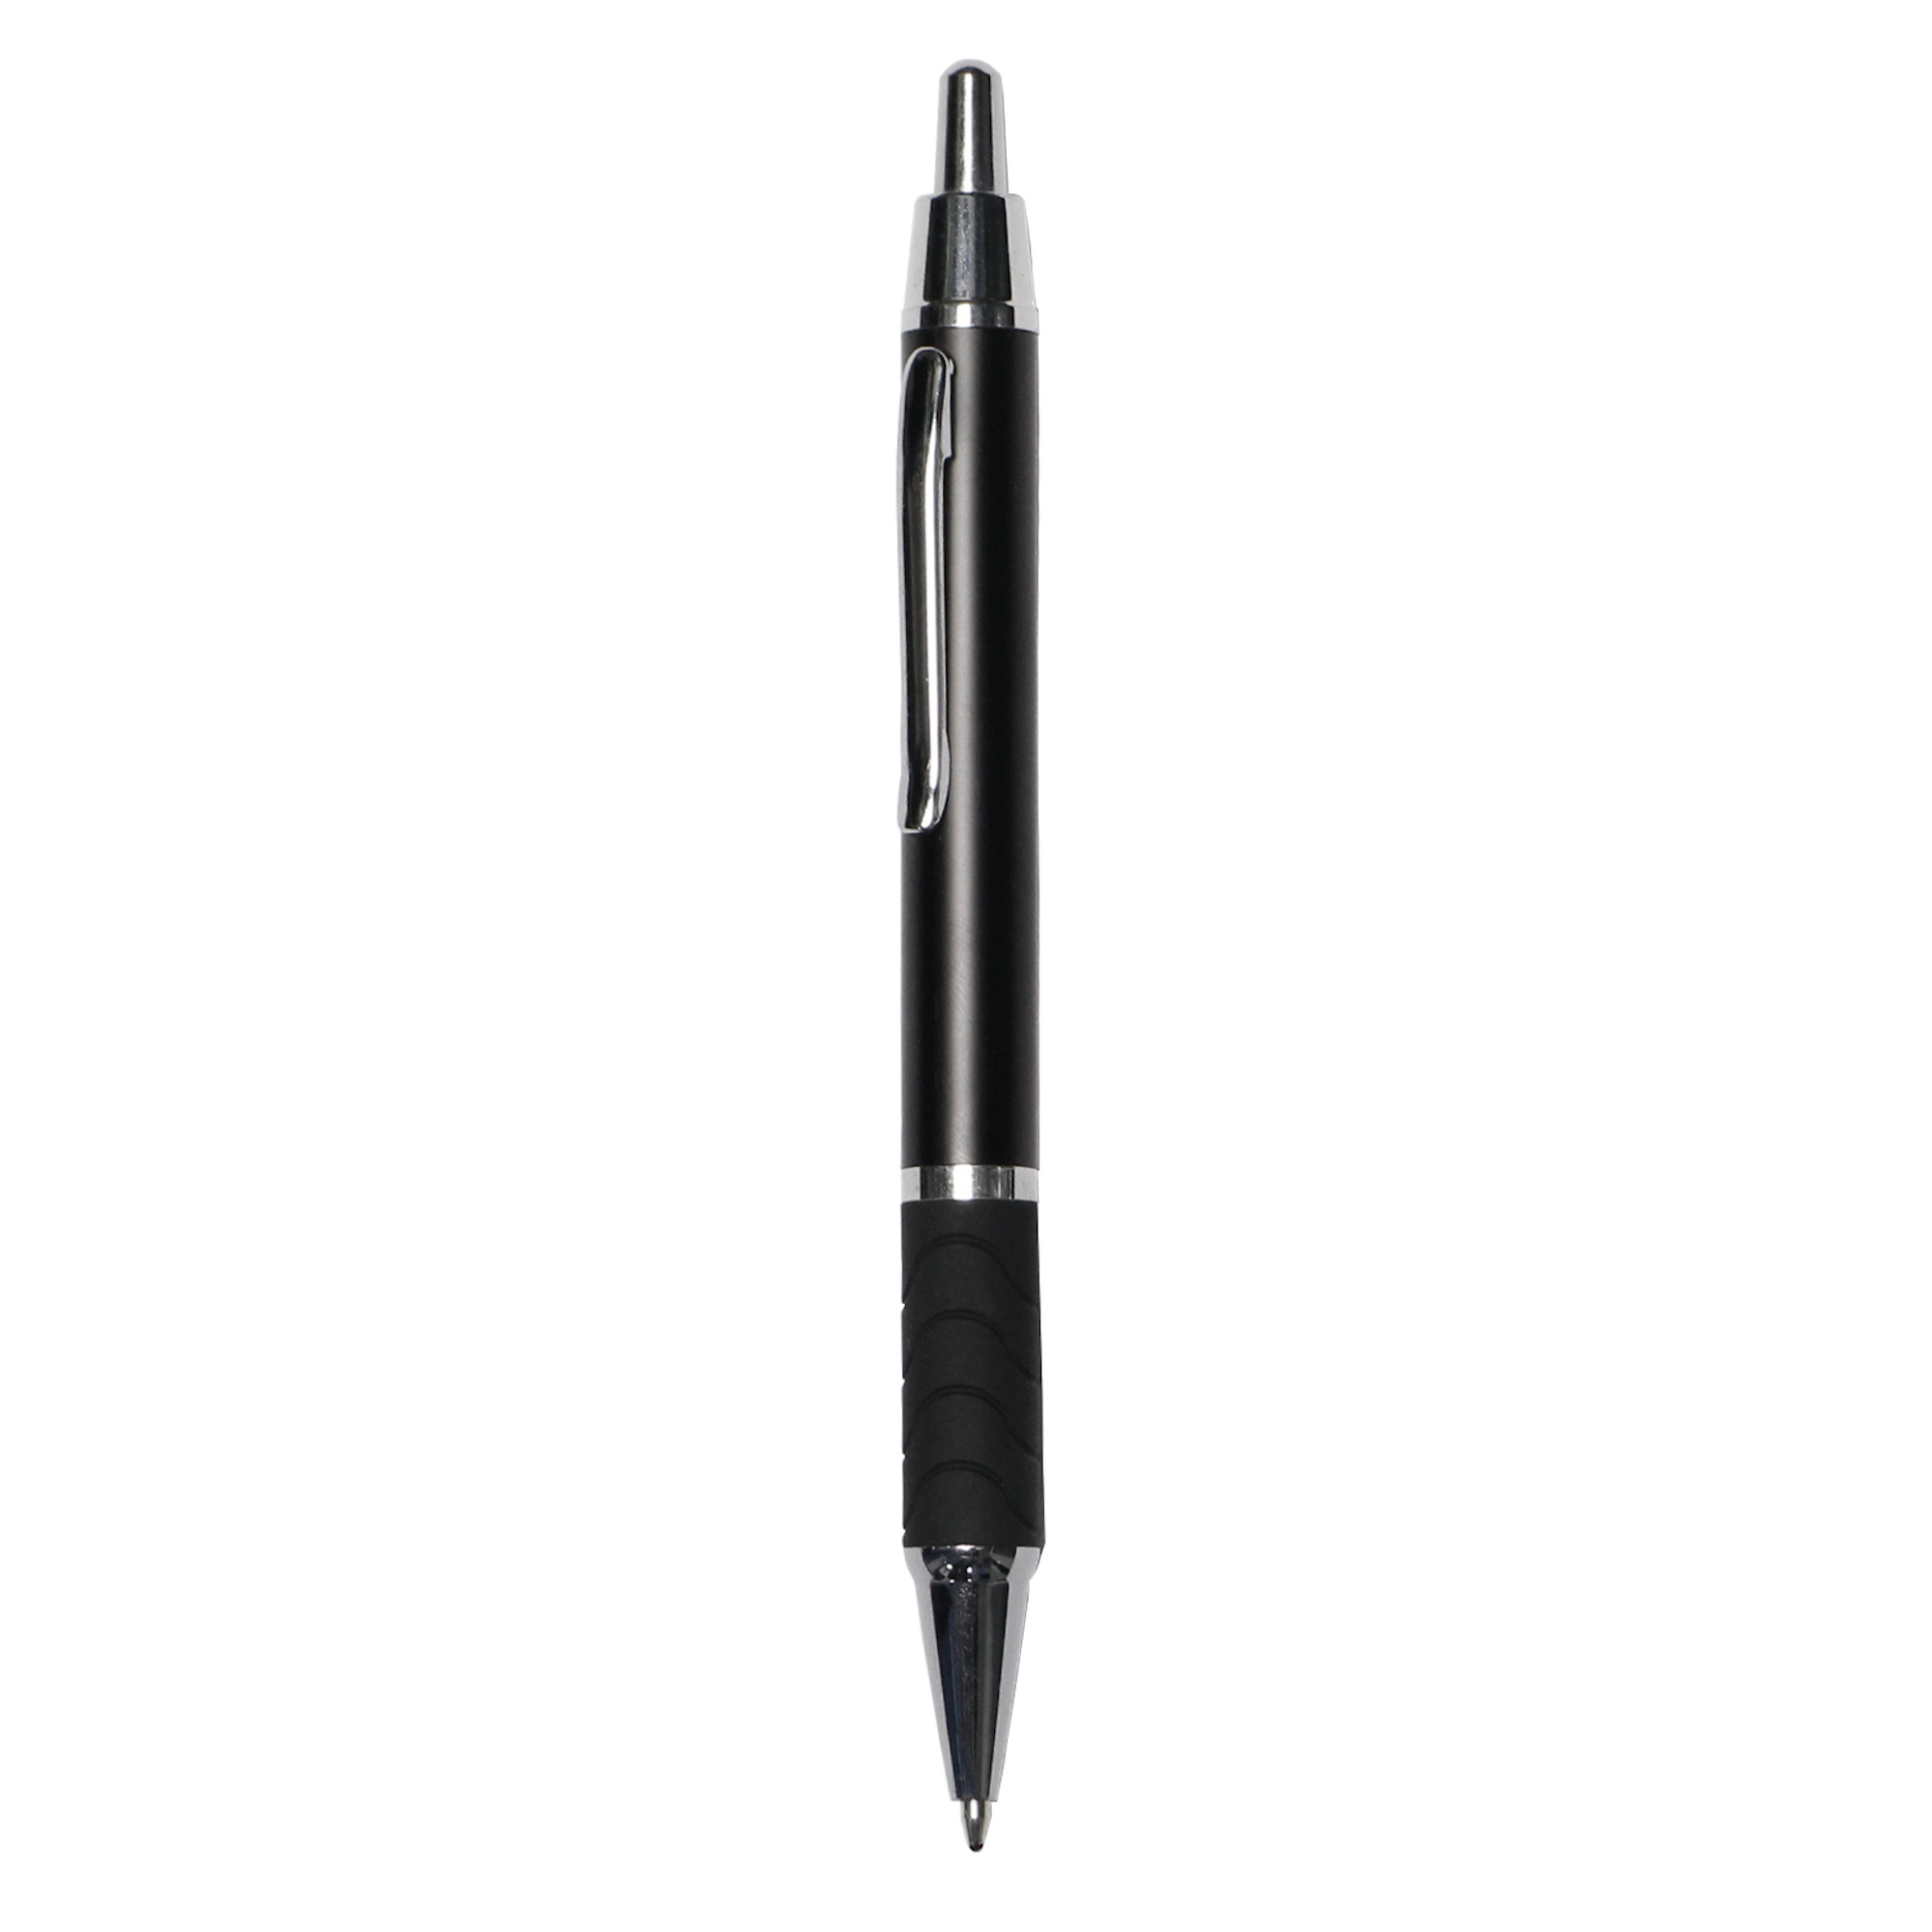 Bolígrafo Tamesis
Color negro